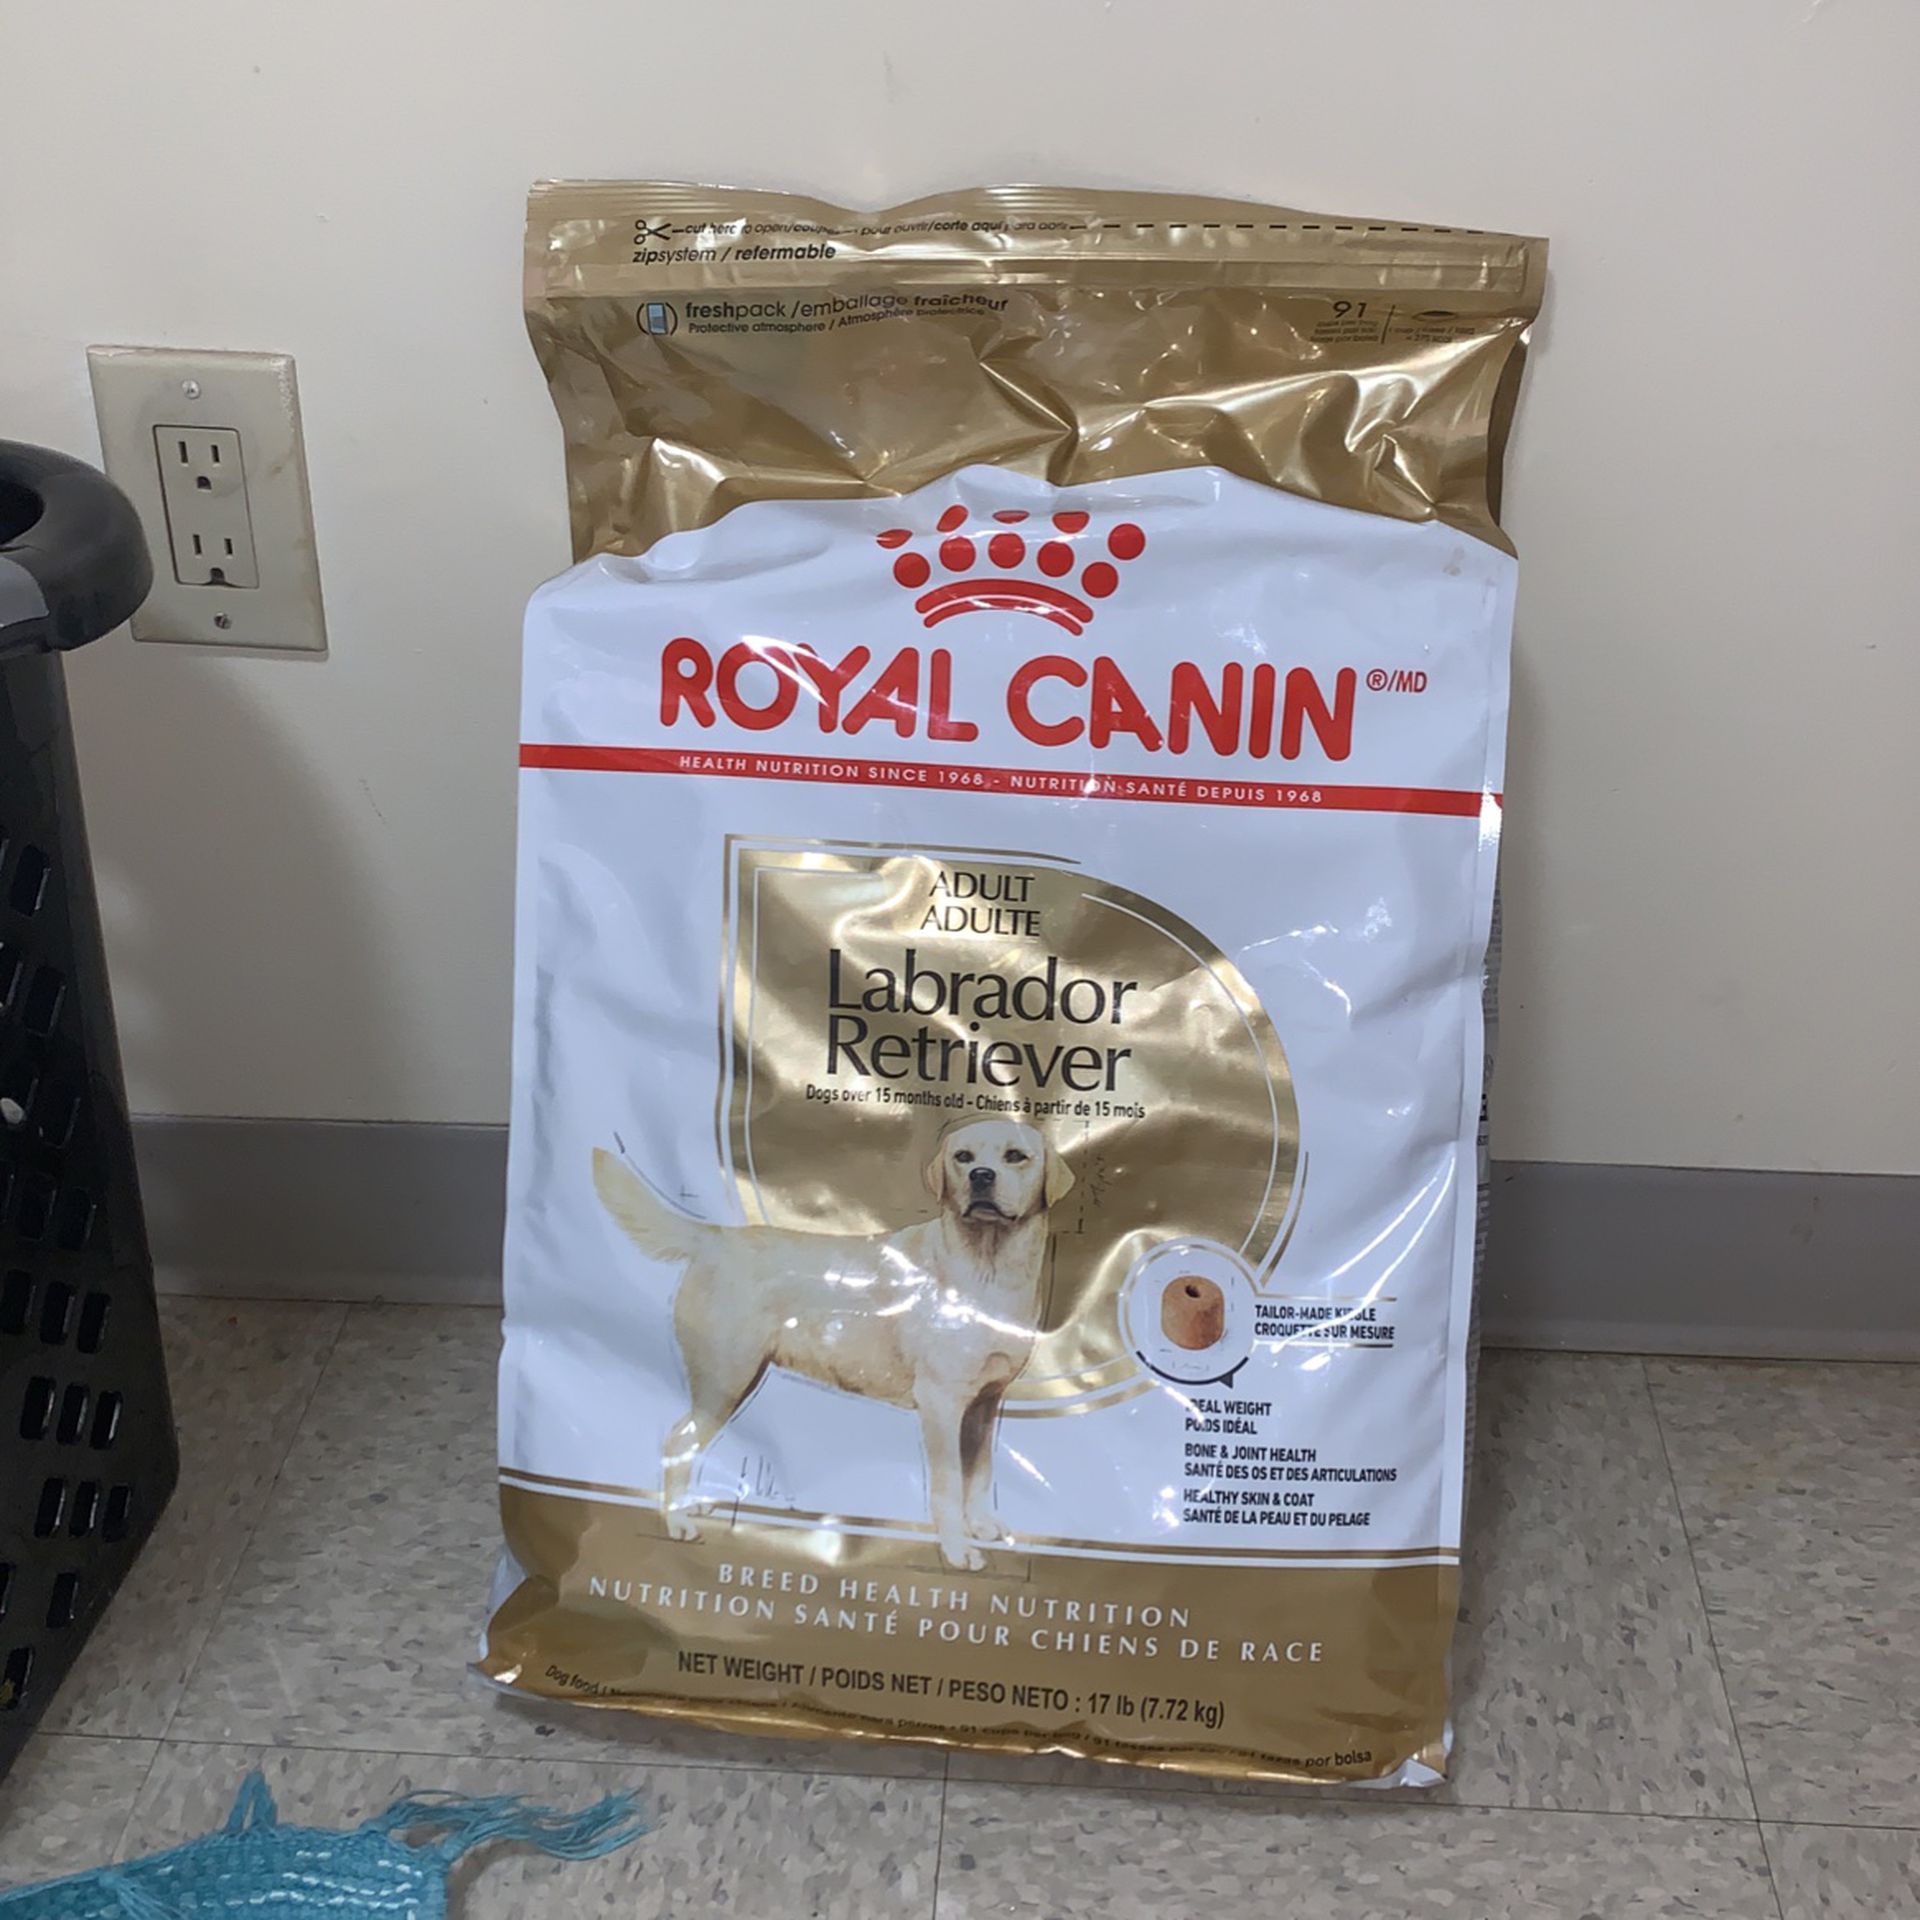 Royal Canin Golden Retriever Dog Food